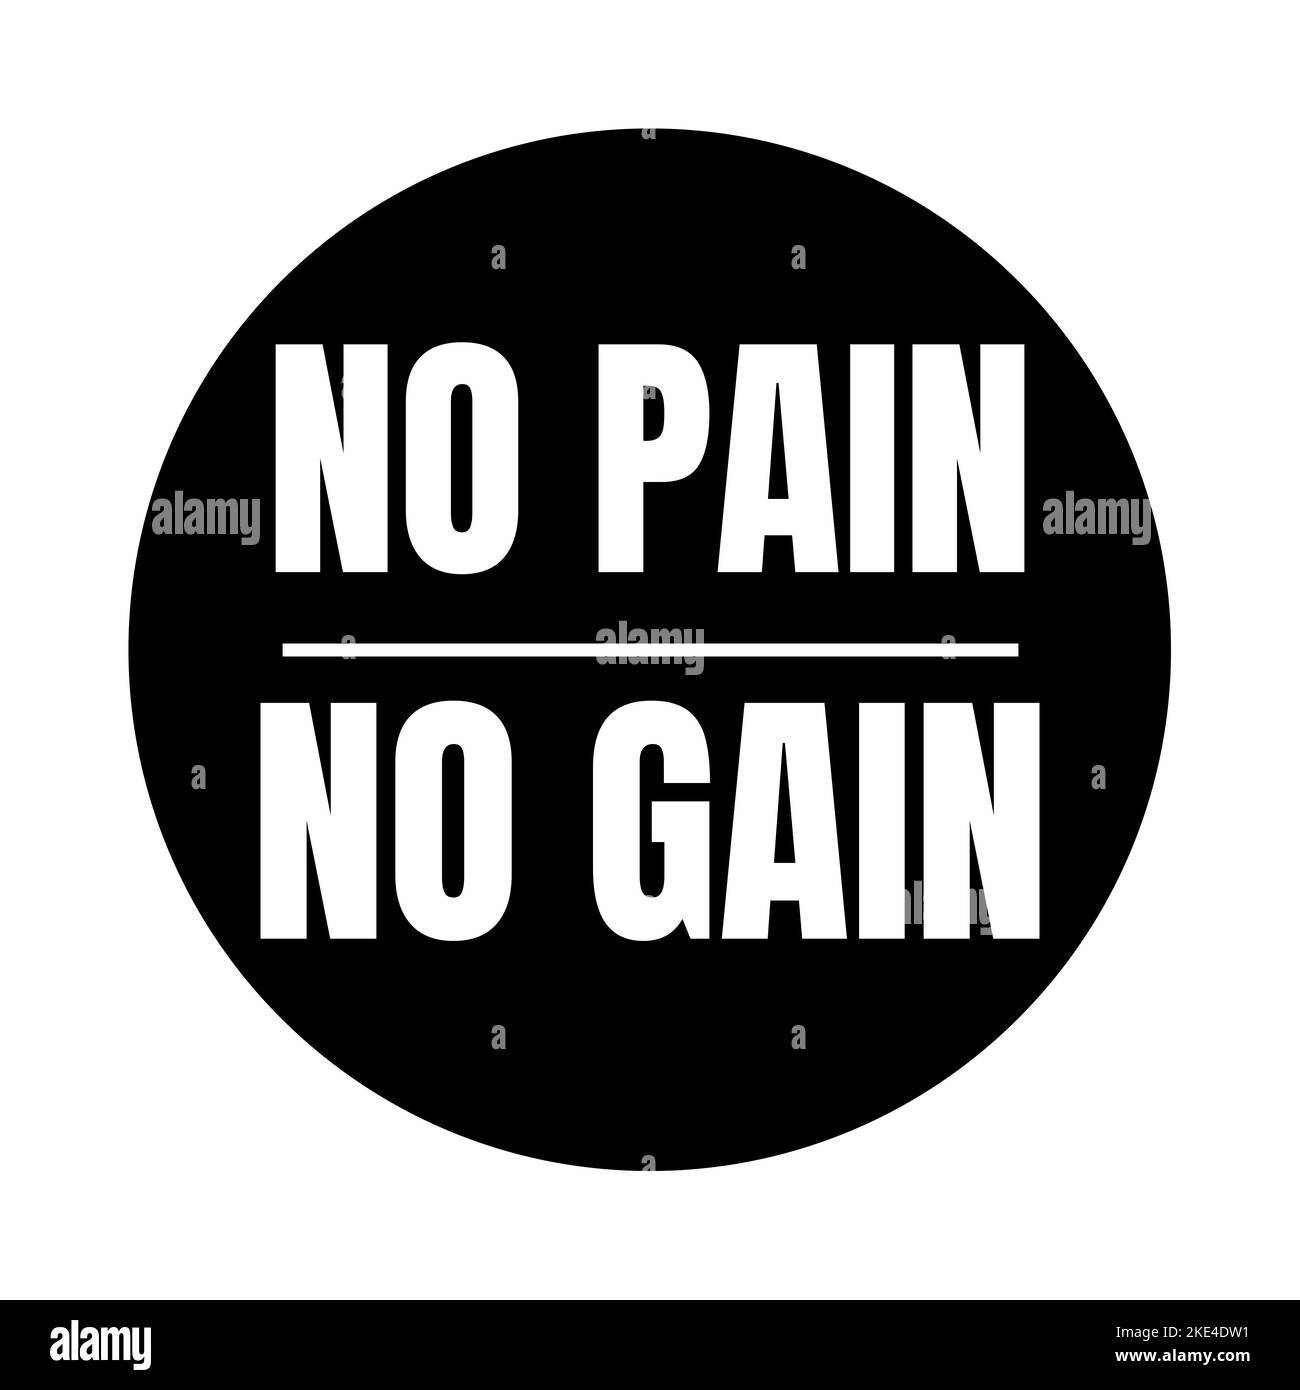 No pain no gain symbol icon Stock Photo